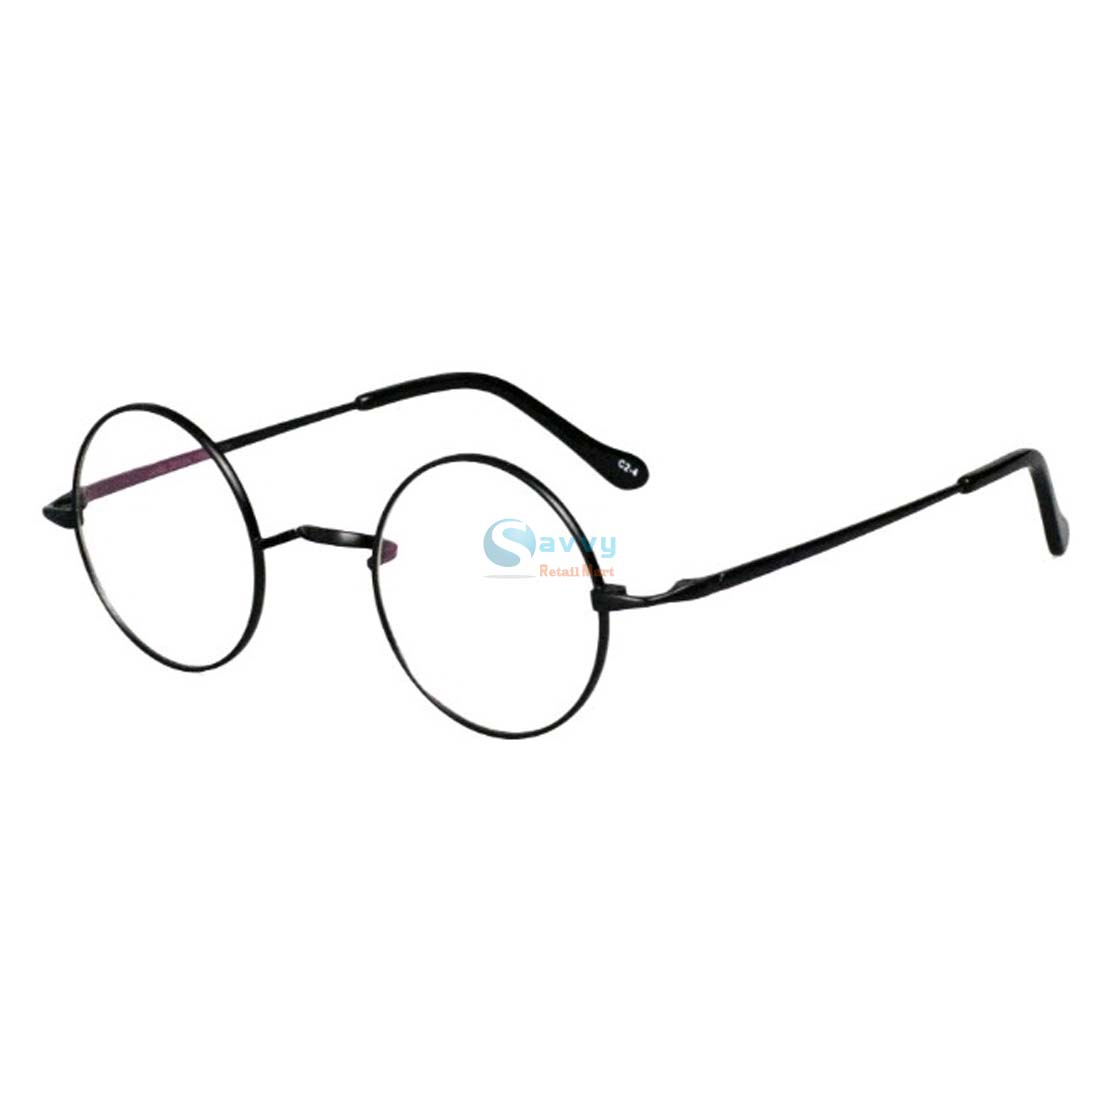 Buy Gray Round Retro Glasses Gandhi John Lennon Windsor Style Eyewear  Online in India - Etsy